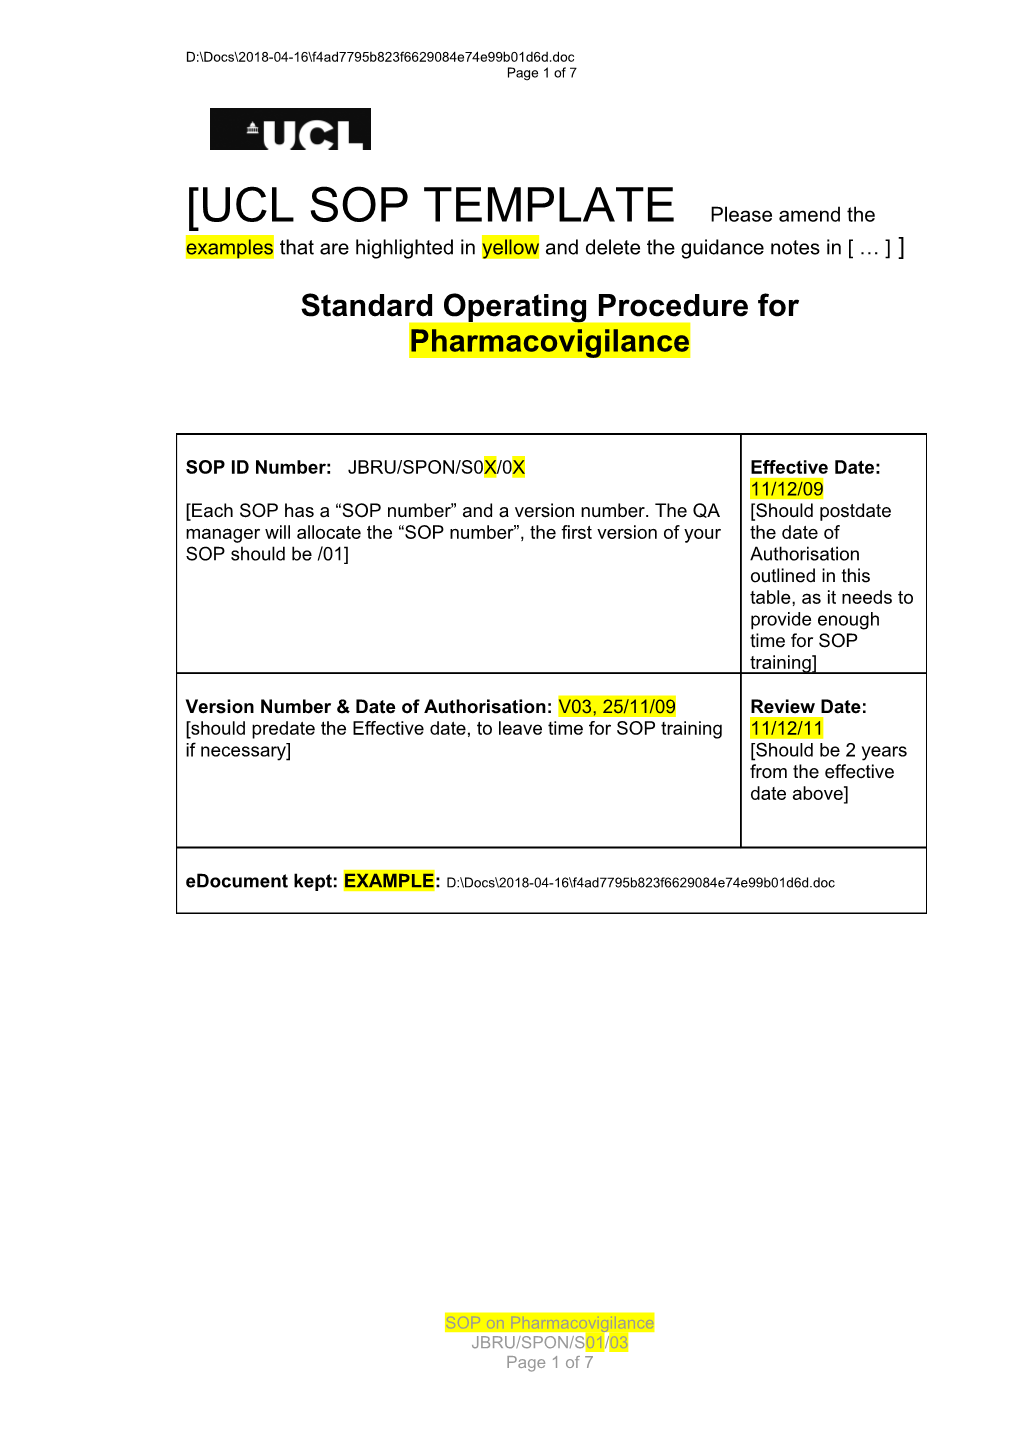 Standard Operating Procedure for Pharmacovigilance